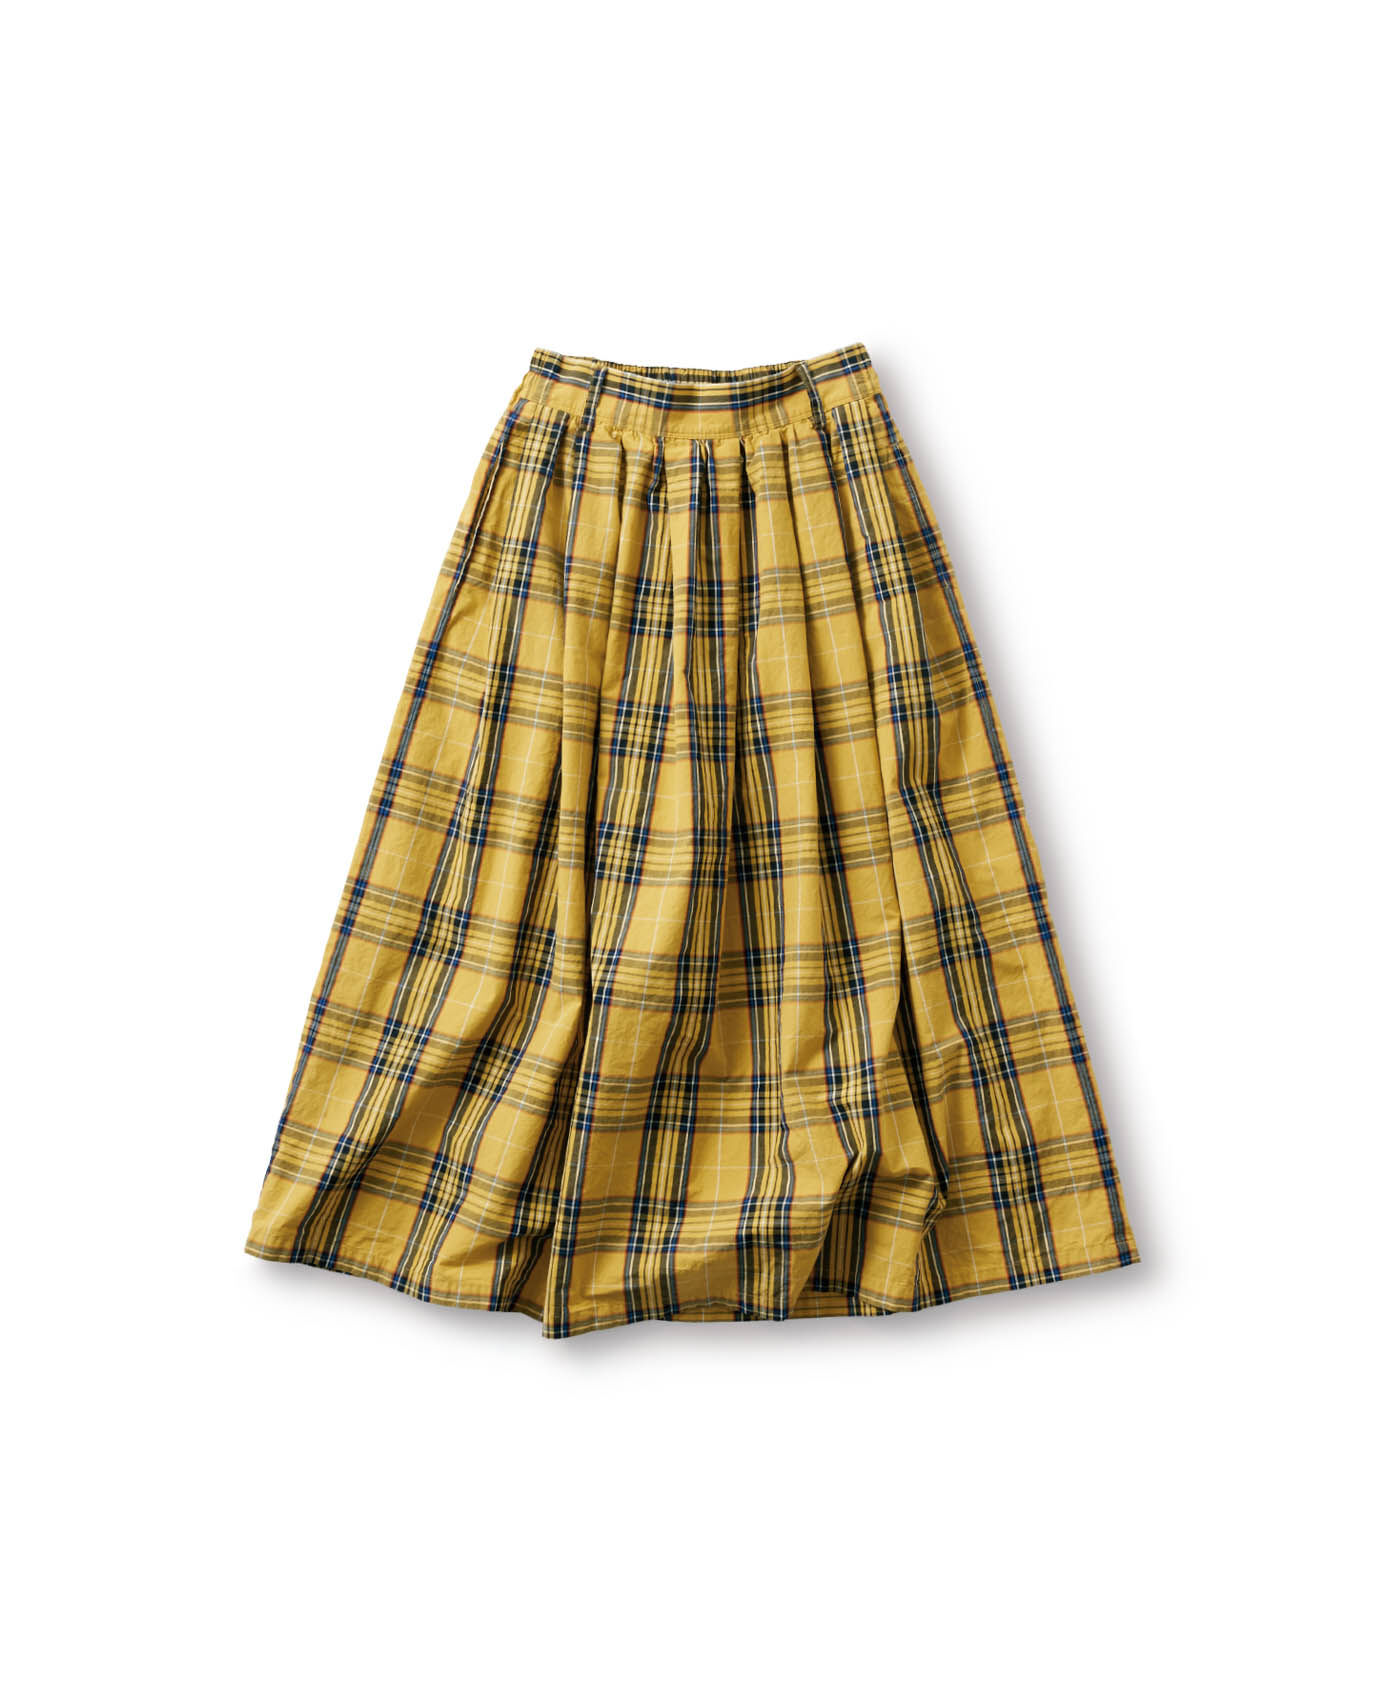 Sunny clouds|サニークラウズ タータンチェックのスカート〈レディース〉黄色